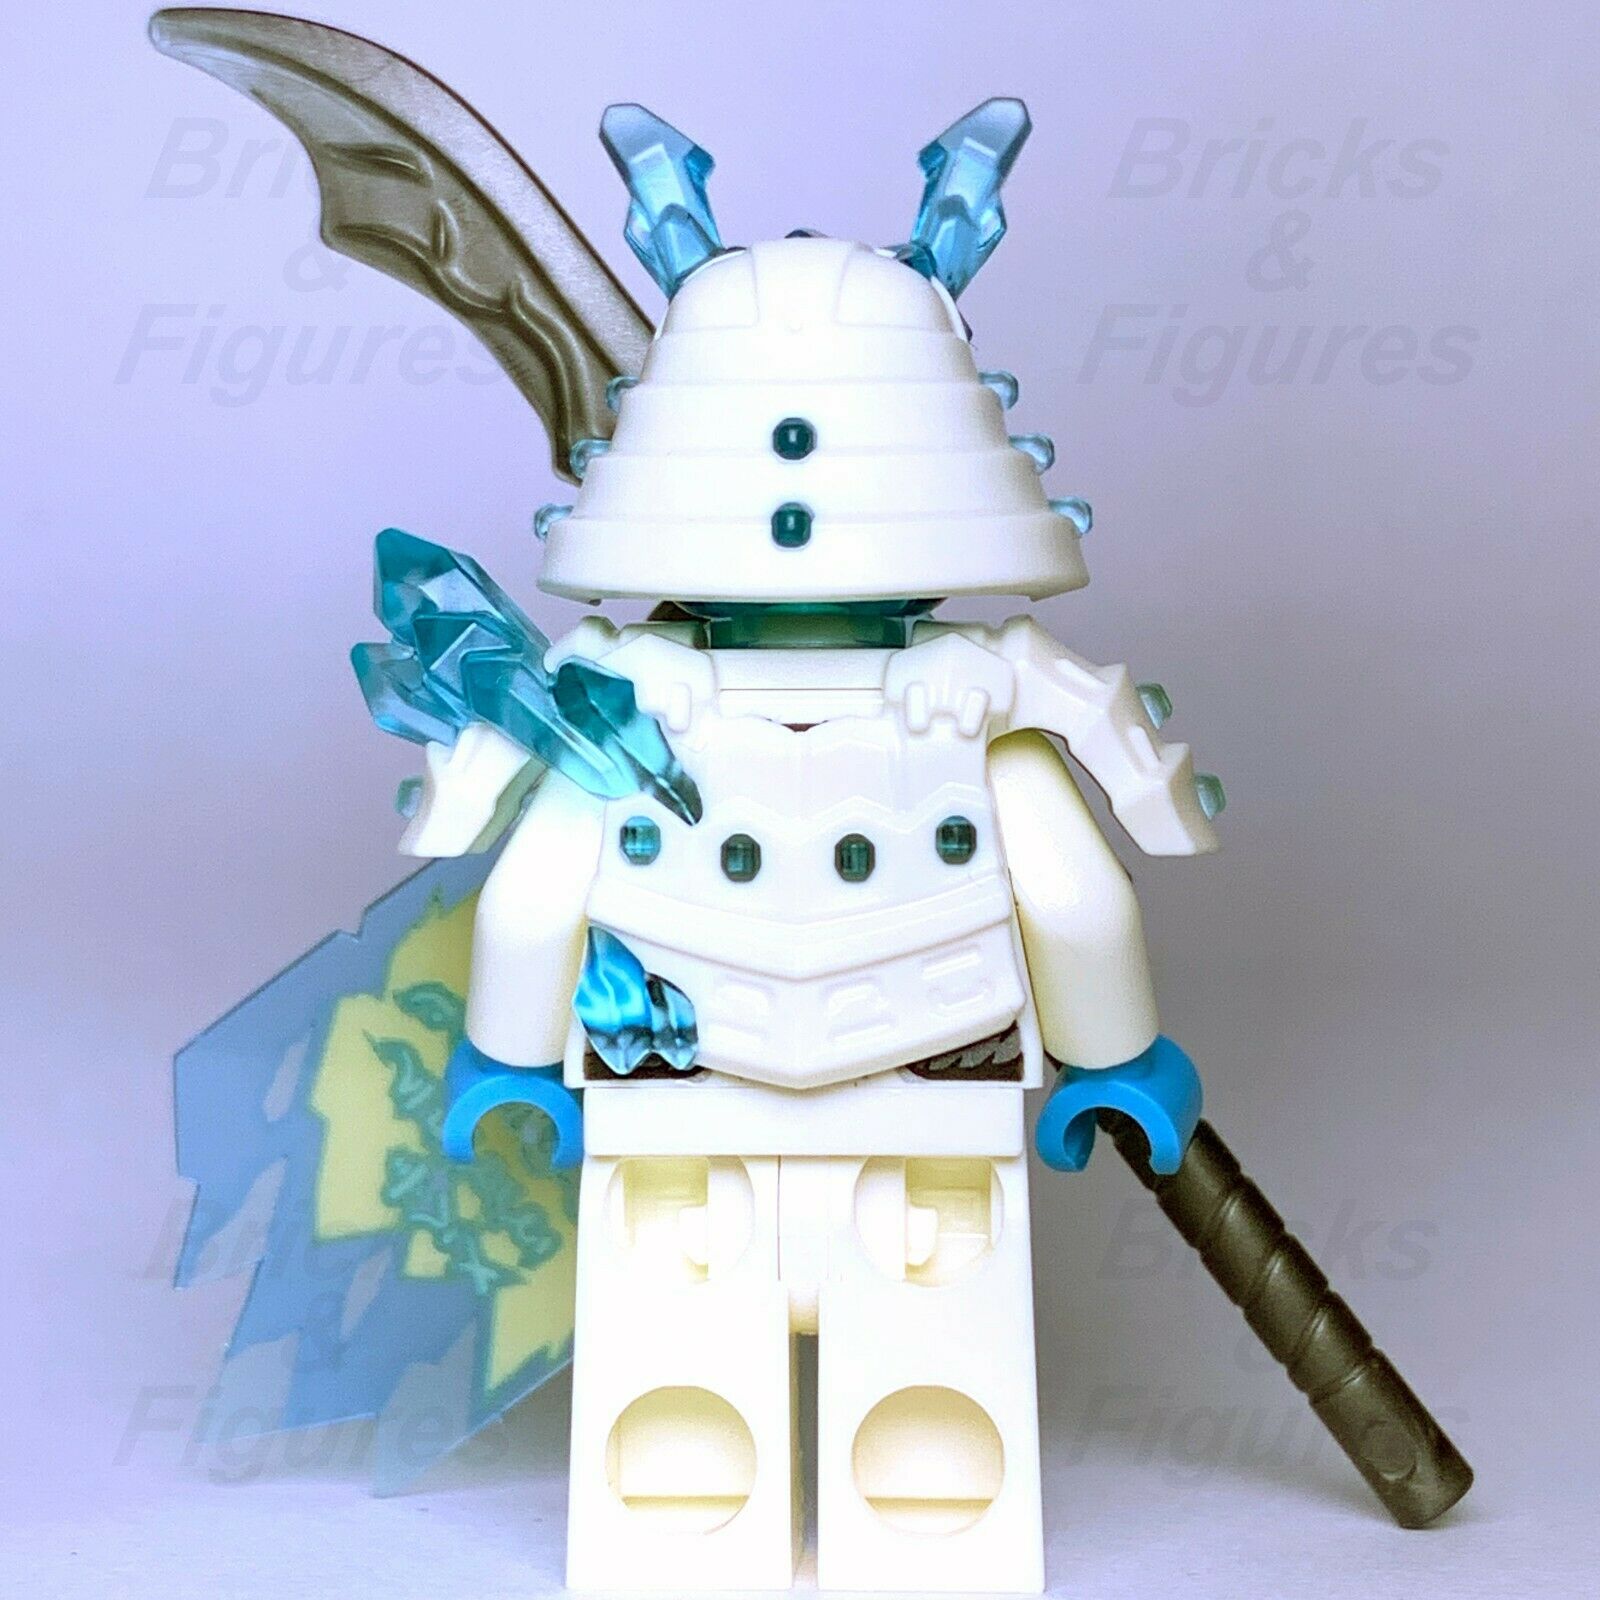 Ninjago LEGO Blizzard Ice Emperor Zane Ninja Minifigure from set 70678  Genuine